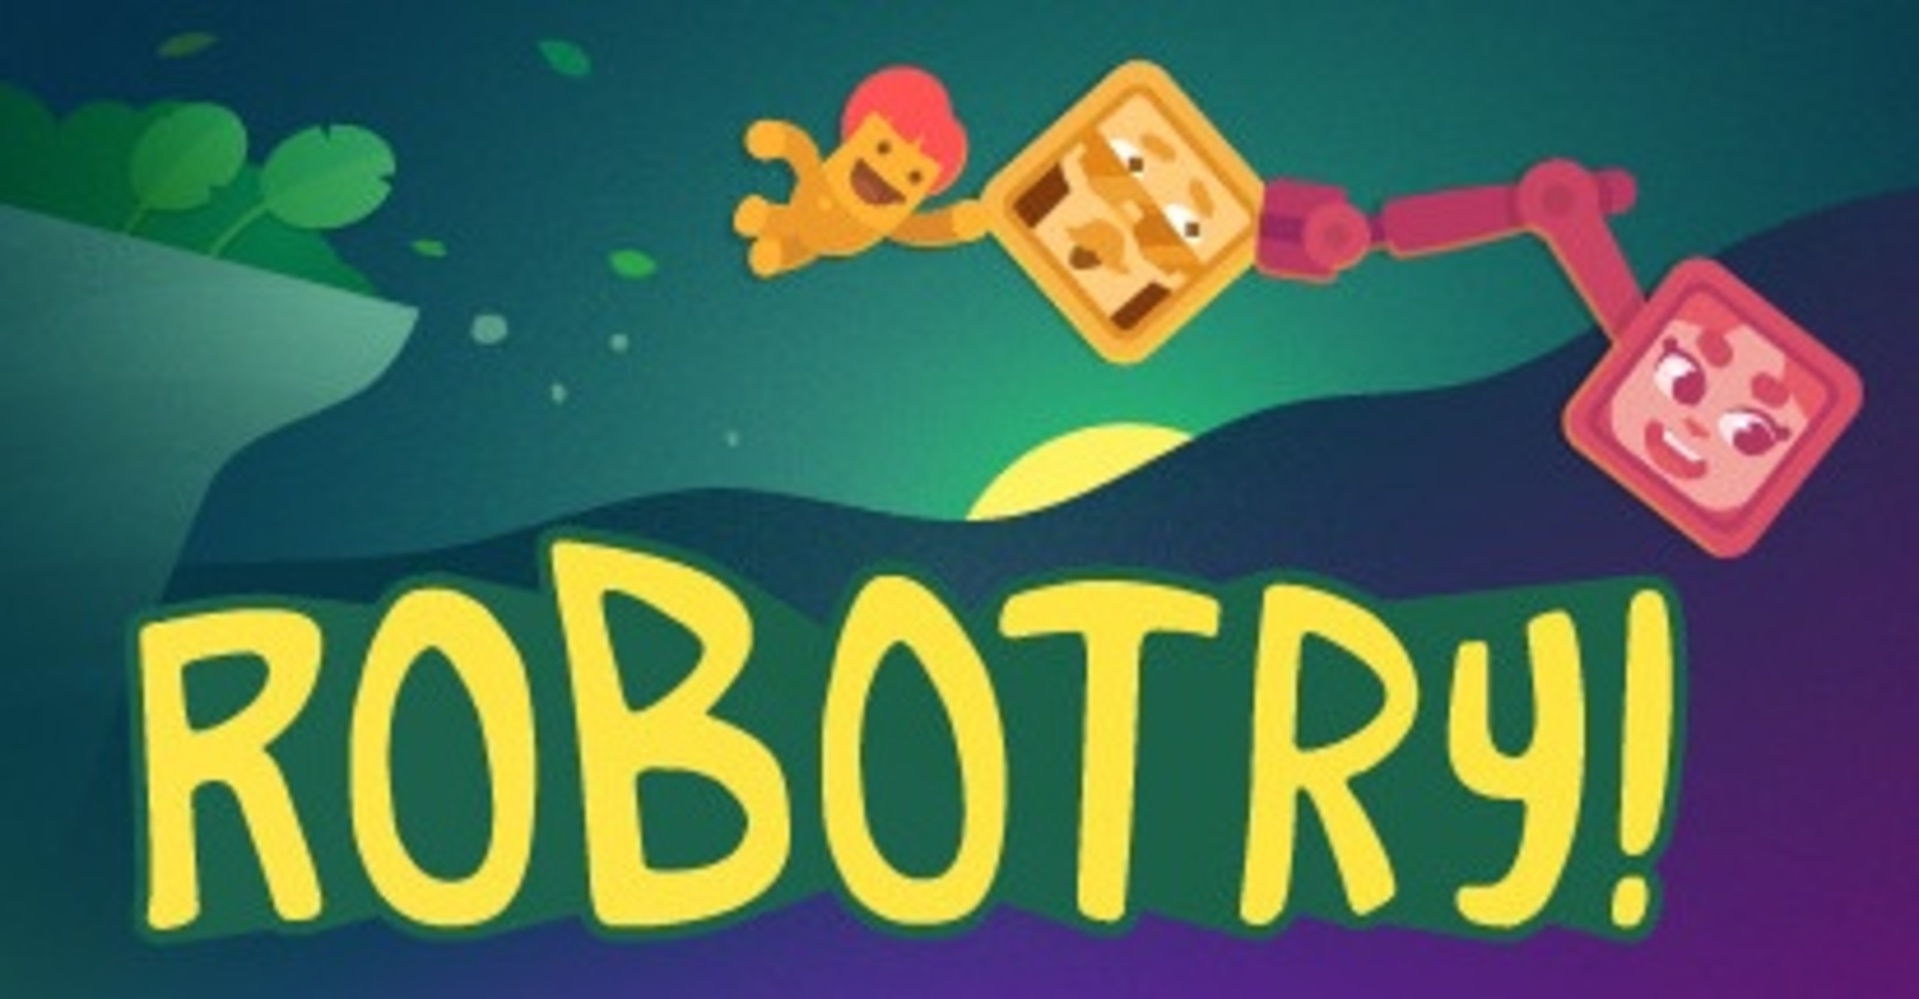 Robotry! Steam Next Fest Demo